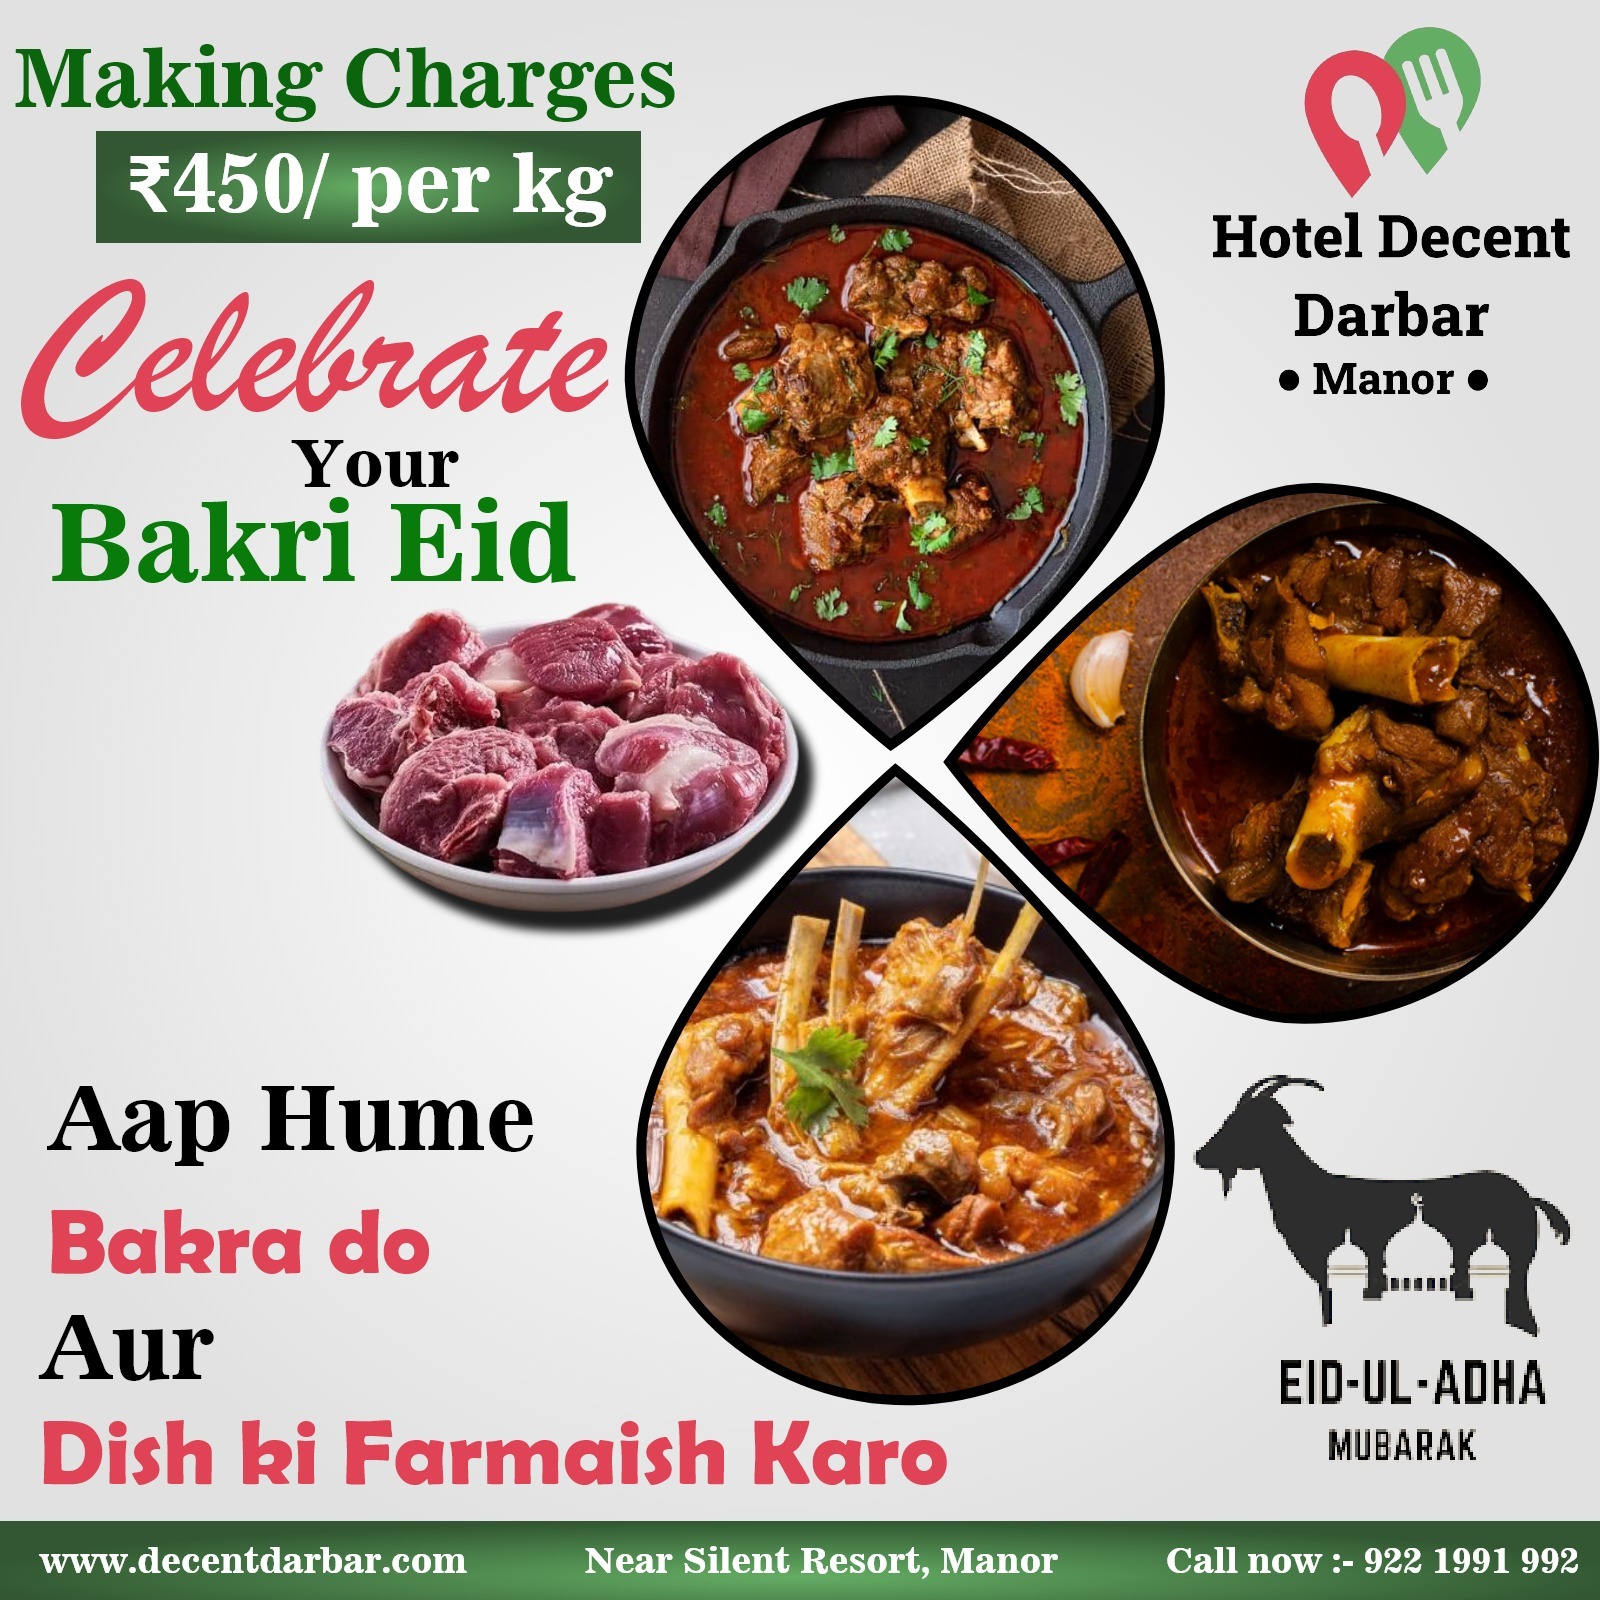 Celebrate Bakri Eid in style at Hotel Decent Darba